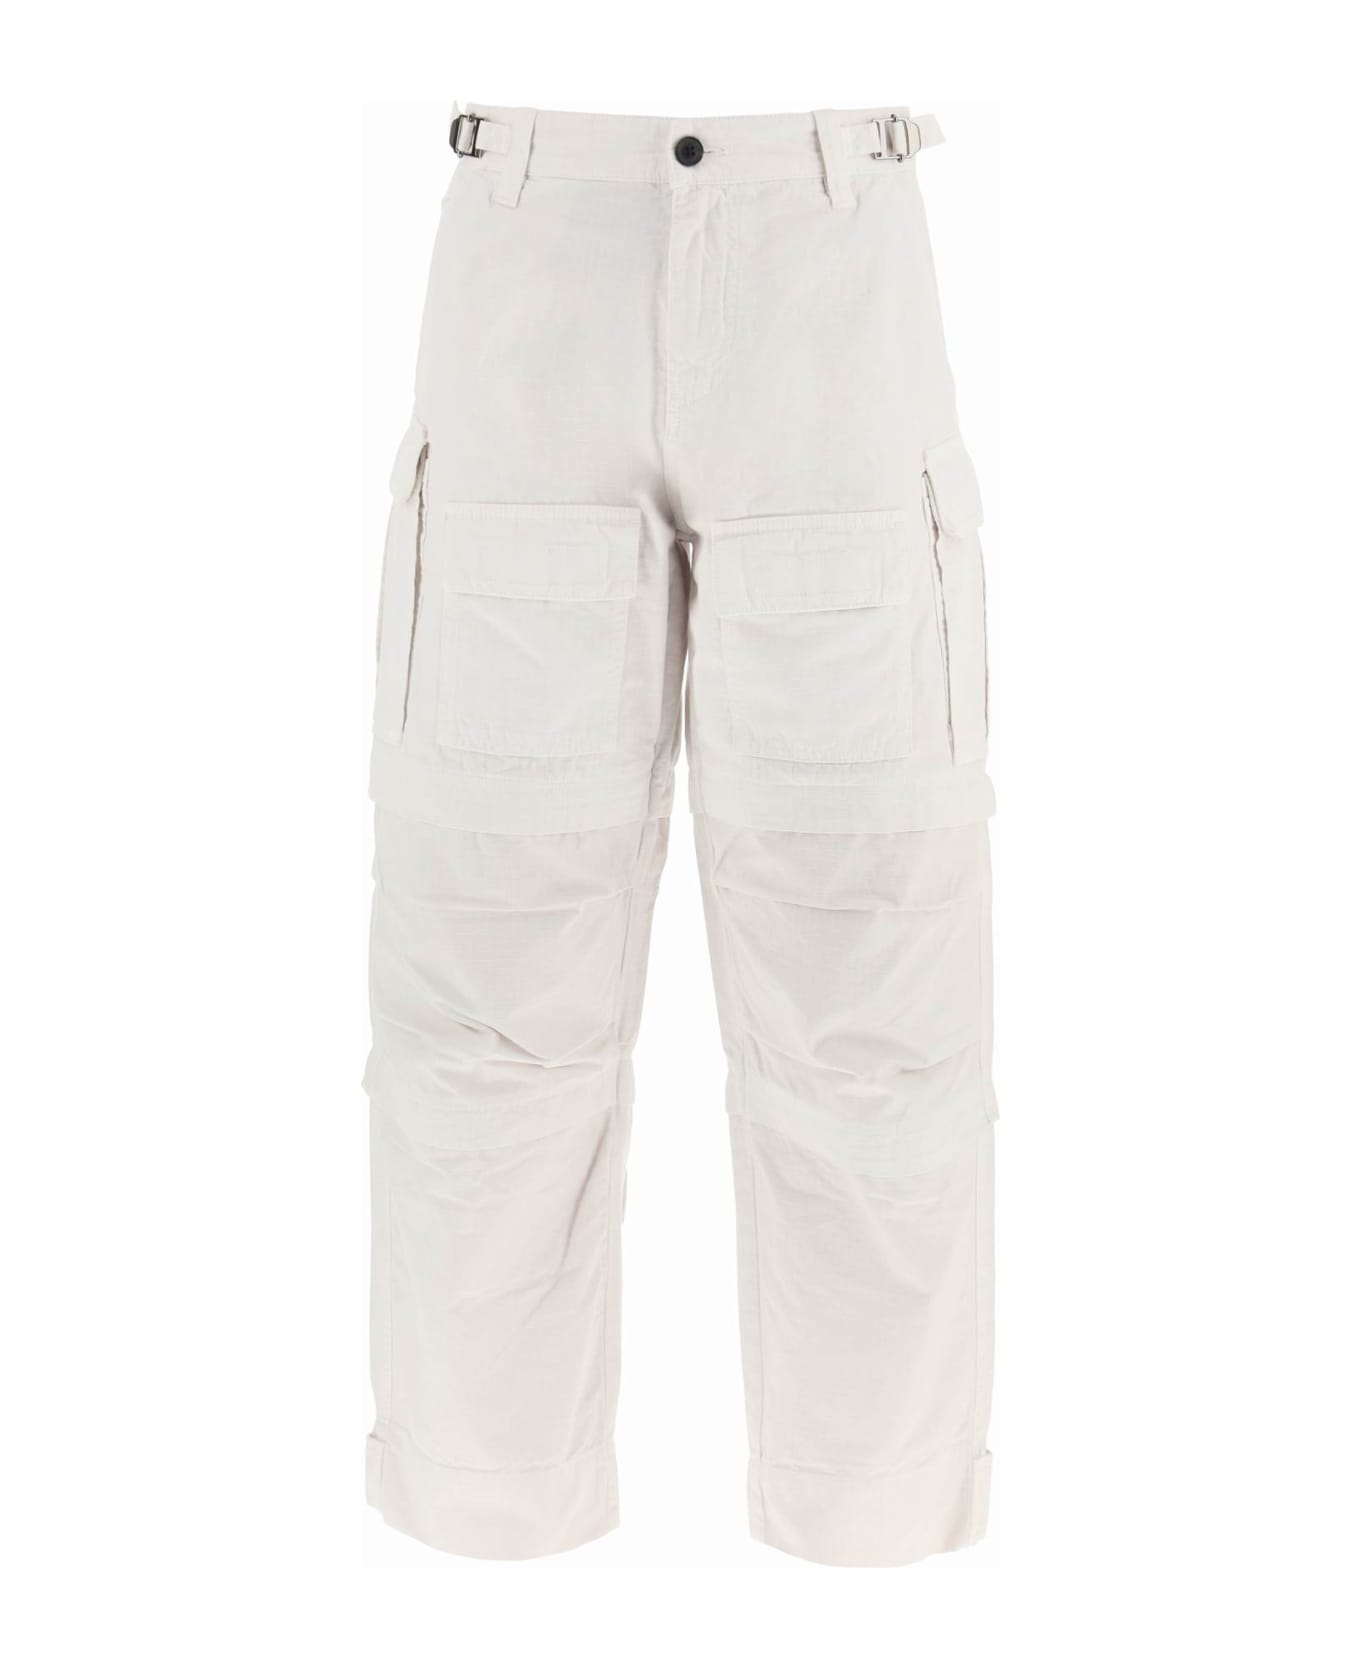 DARKPARK 'julia' Ripstop Cotton Cargo Pants - WHITE